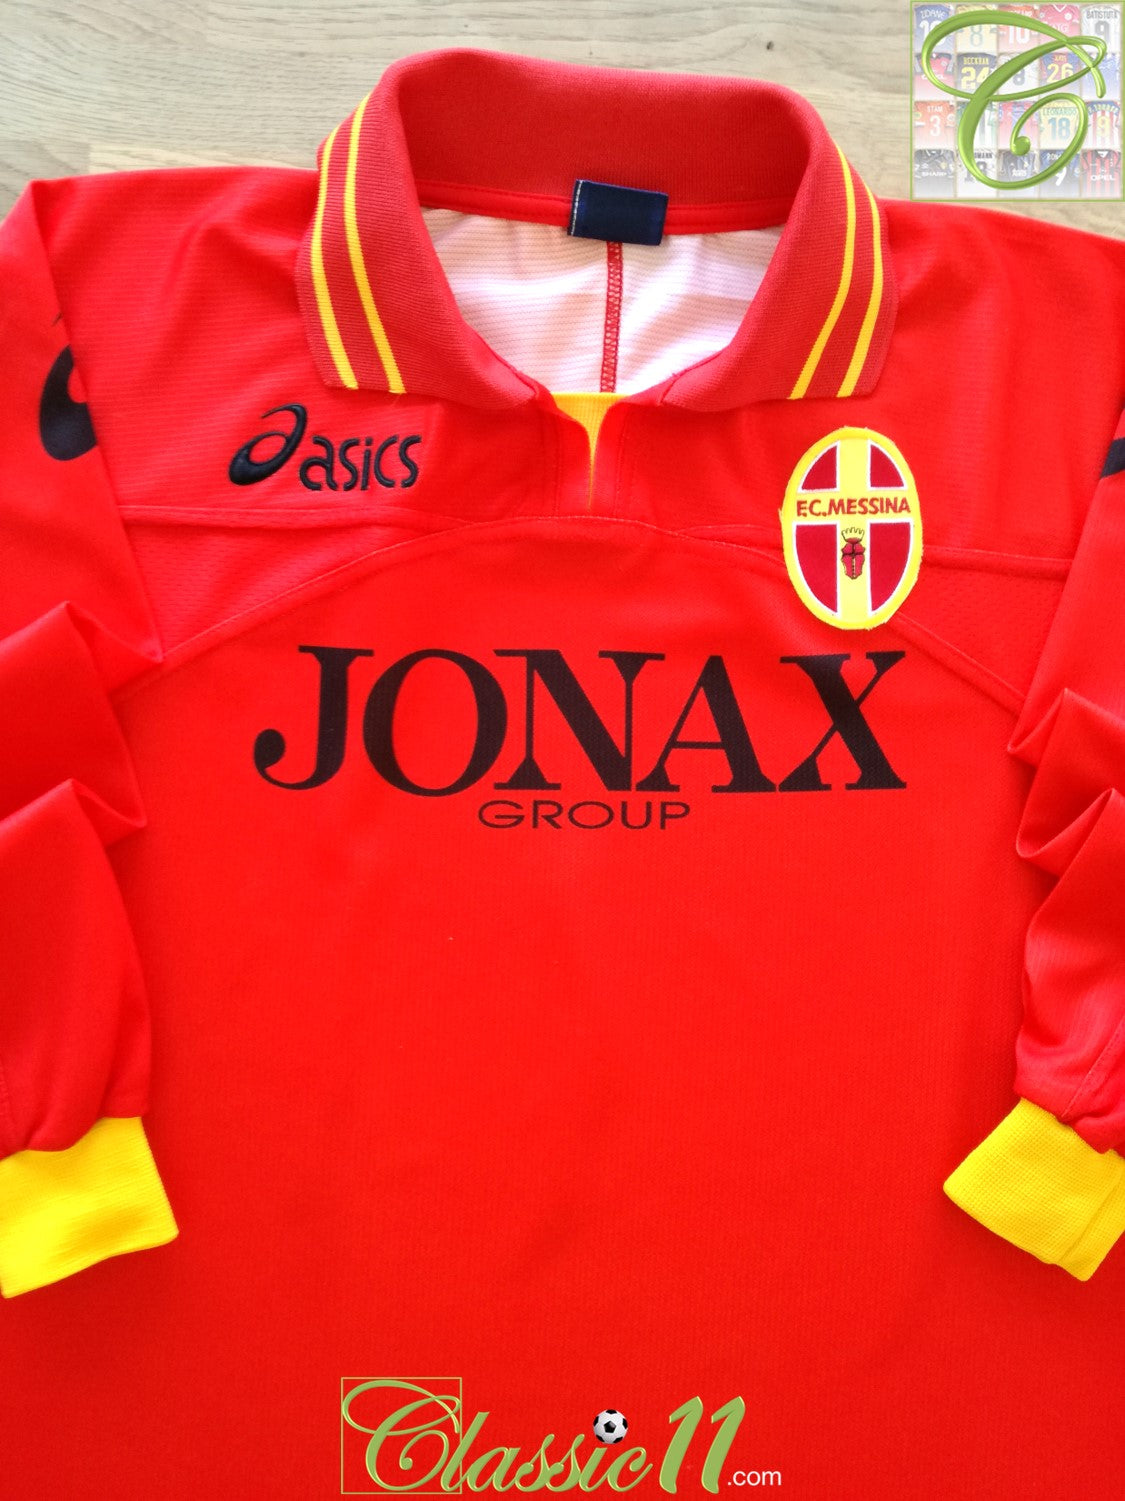 2001/02 Messina Away Football Shirt / Old Official Asics Soccer Jersey